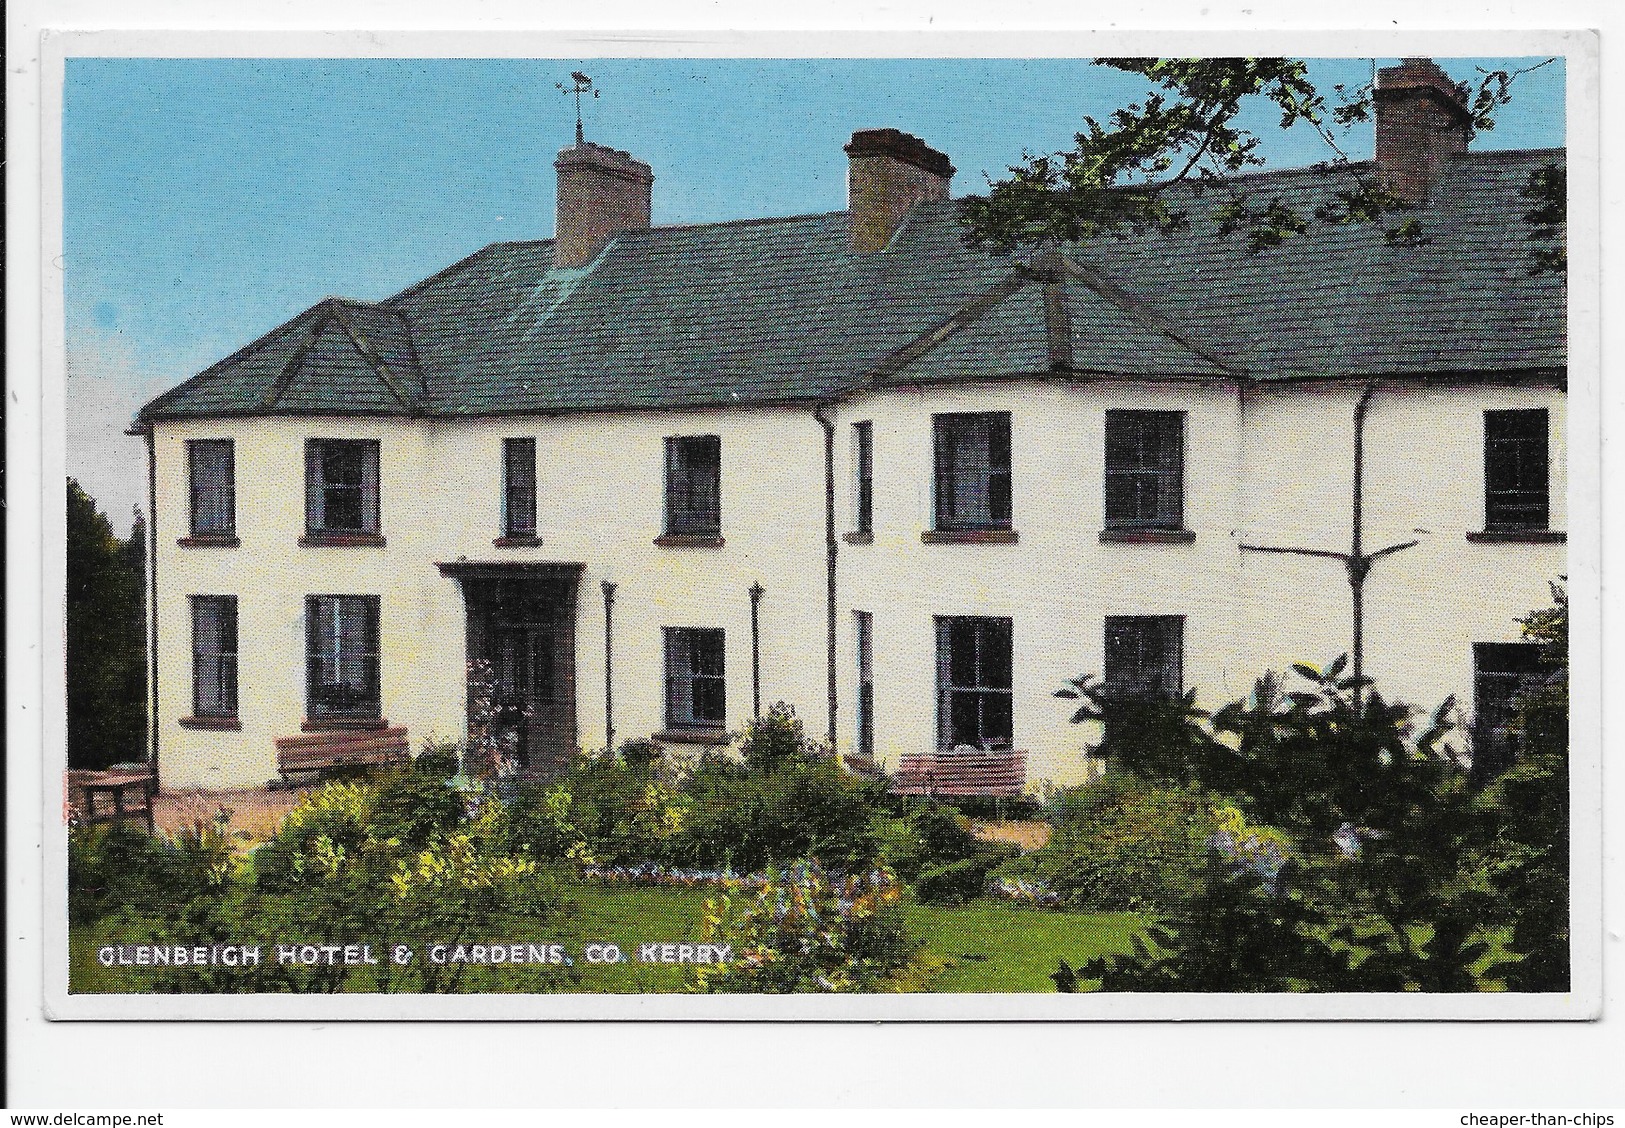 Glenbeigh Hotel & Gardens, Co. Kerry - Kerry